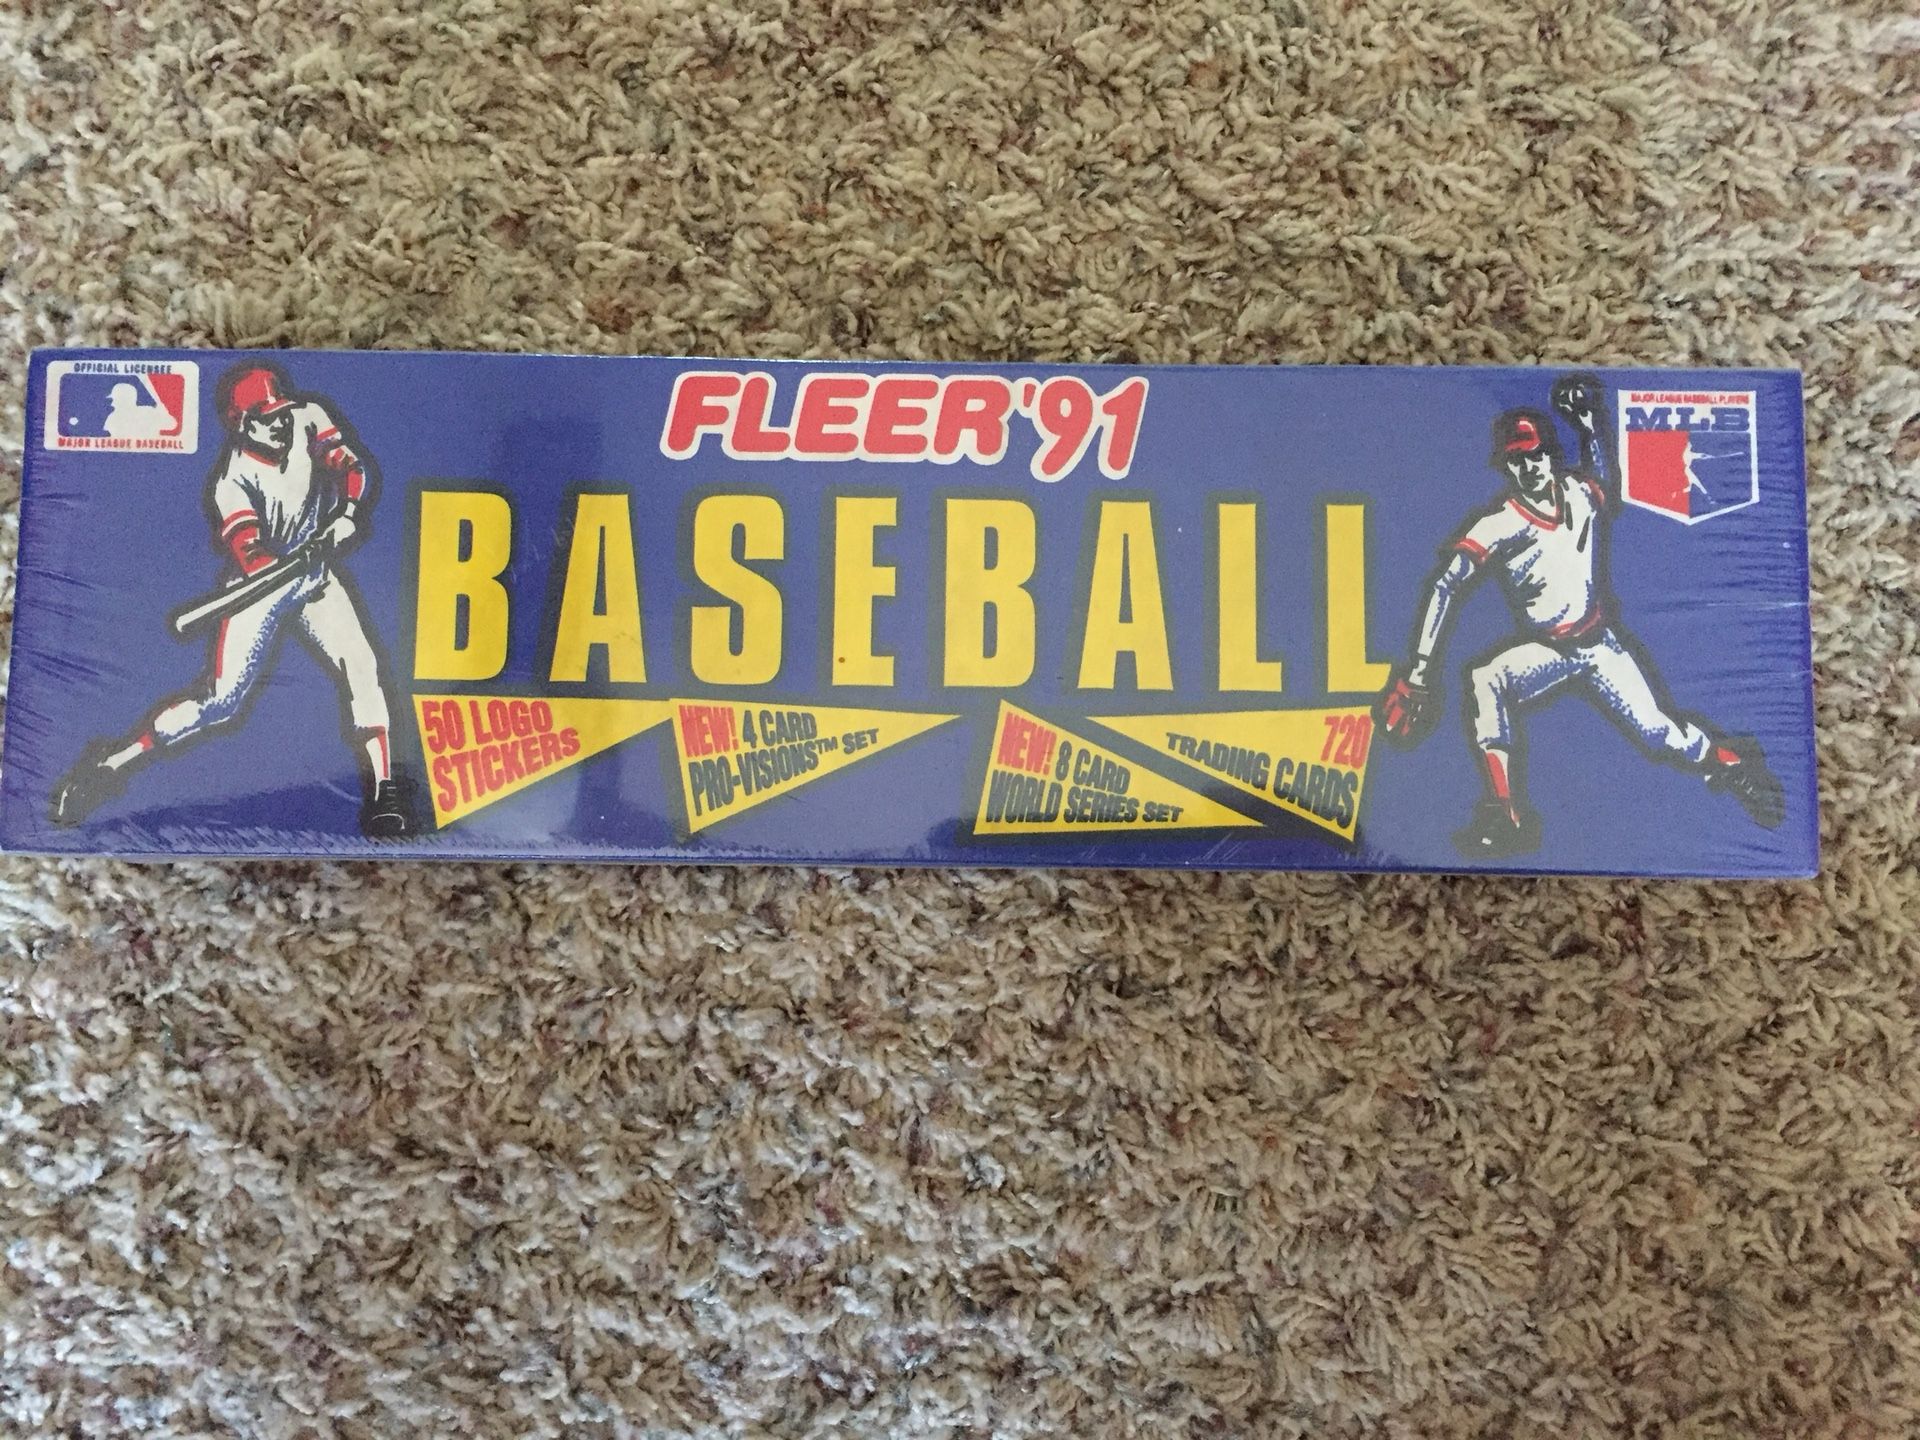 Fleer 1991 baseball cards (unopened)